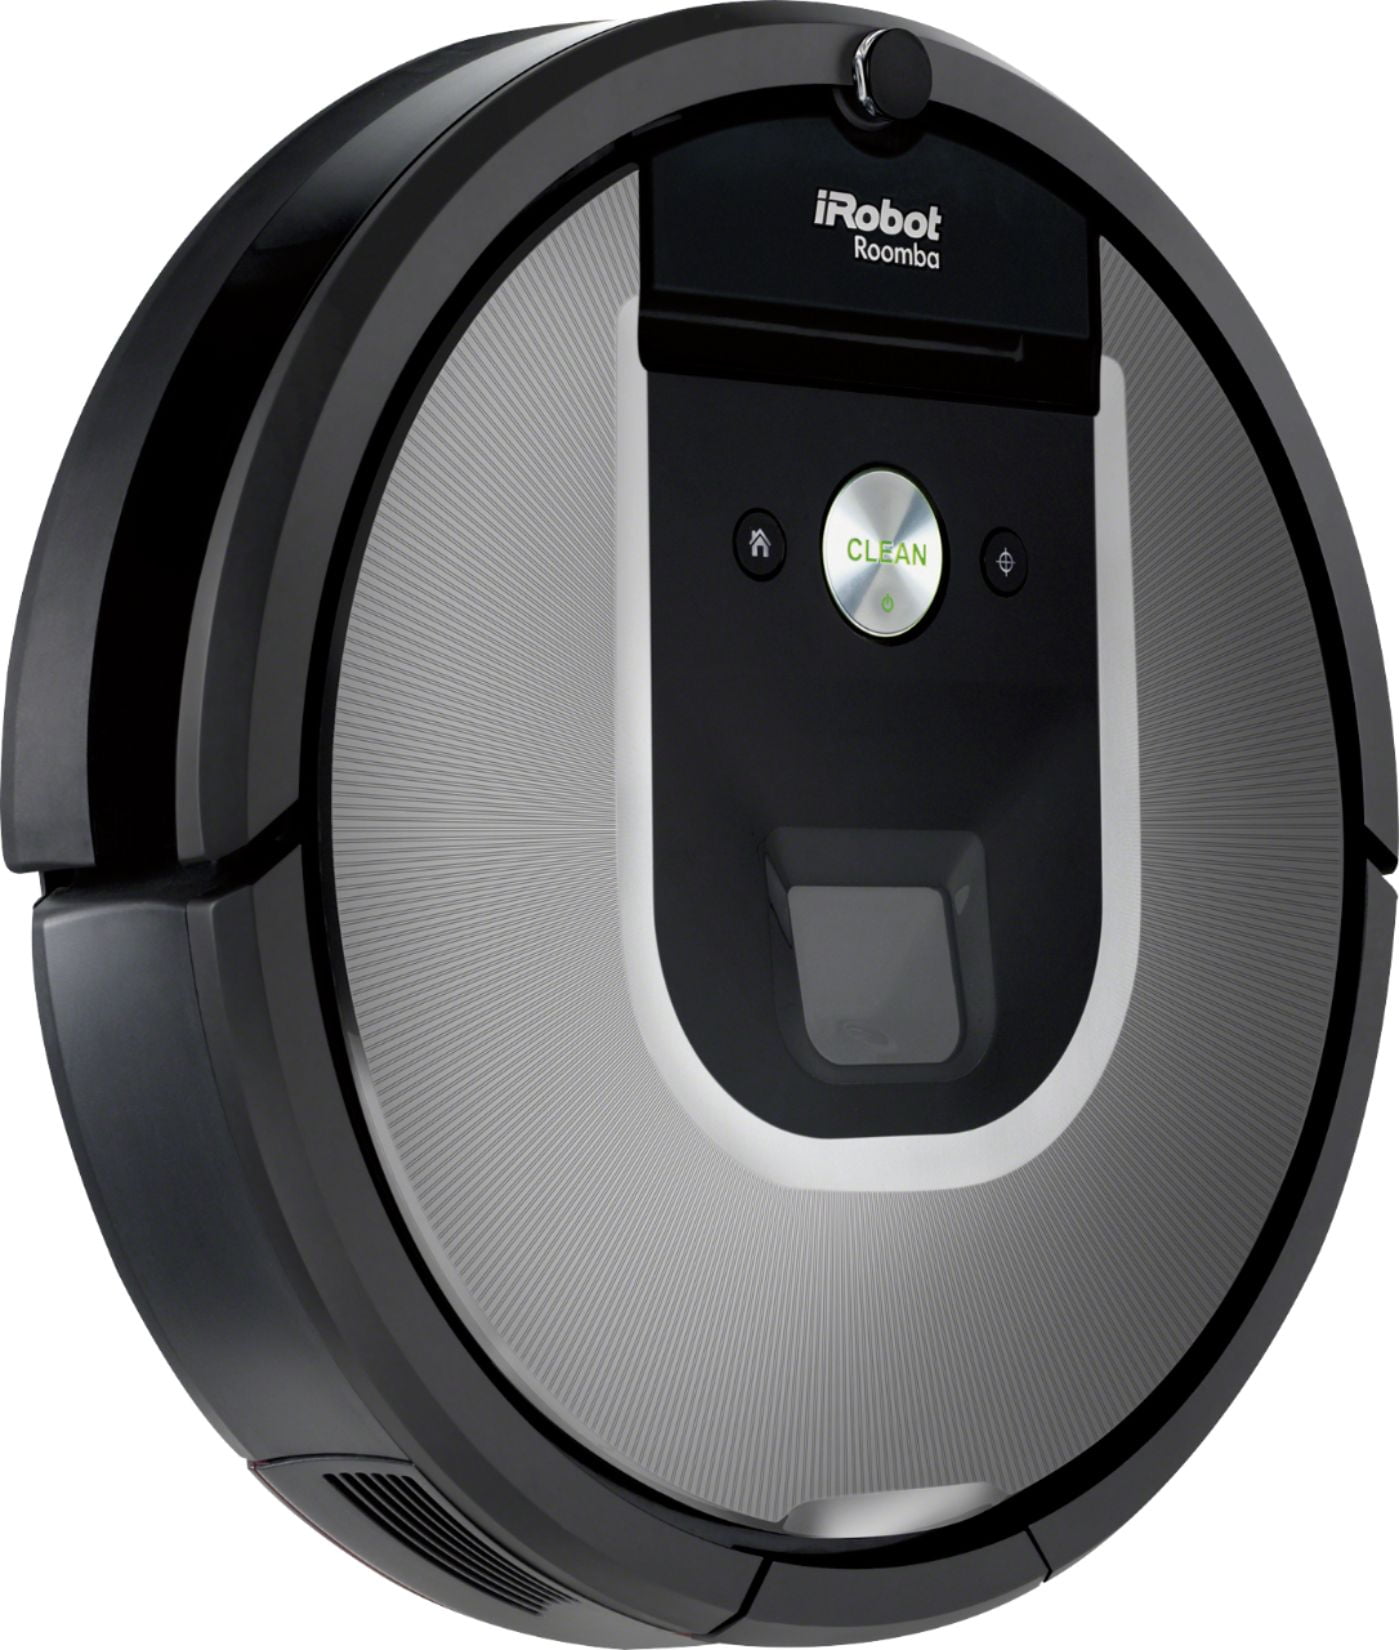 iRobot Roomba 960 WiFi Connected Vacuuming Robot - New | Walmart Canada